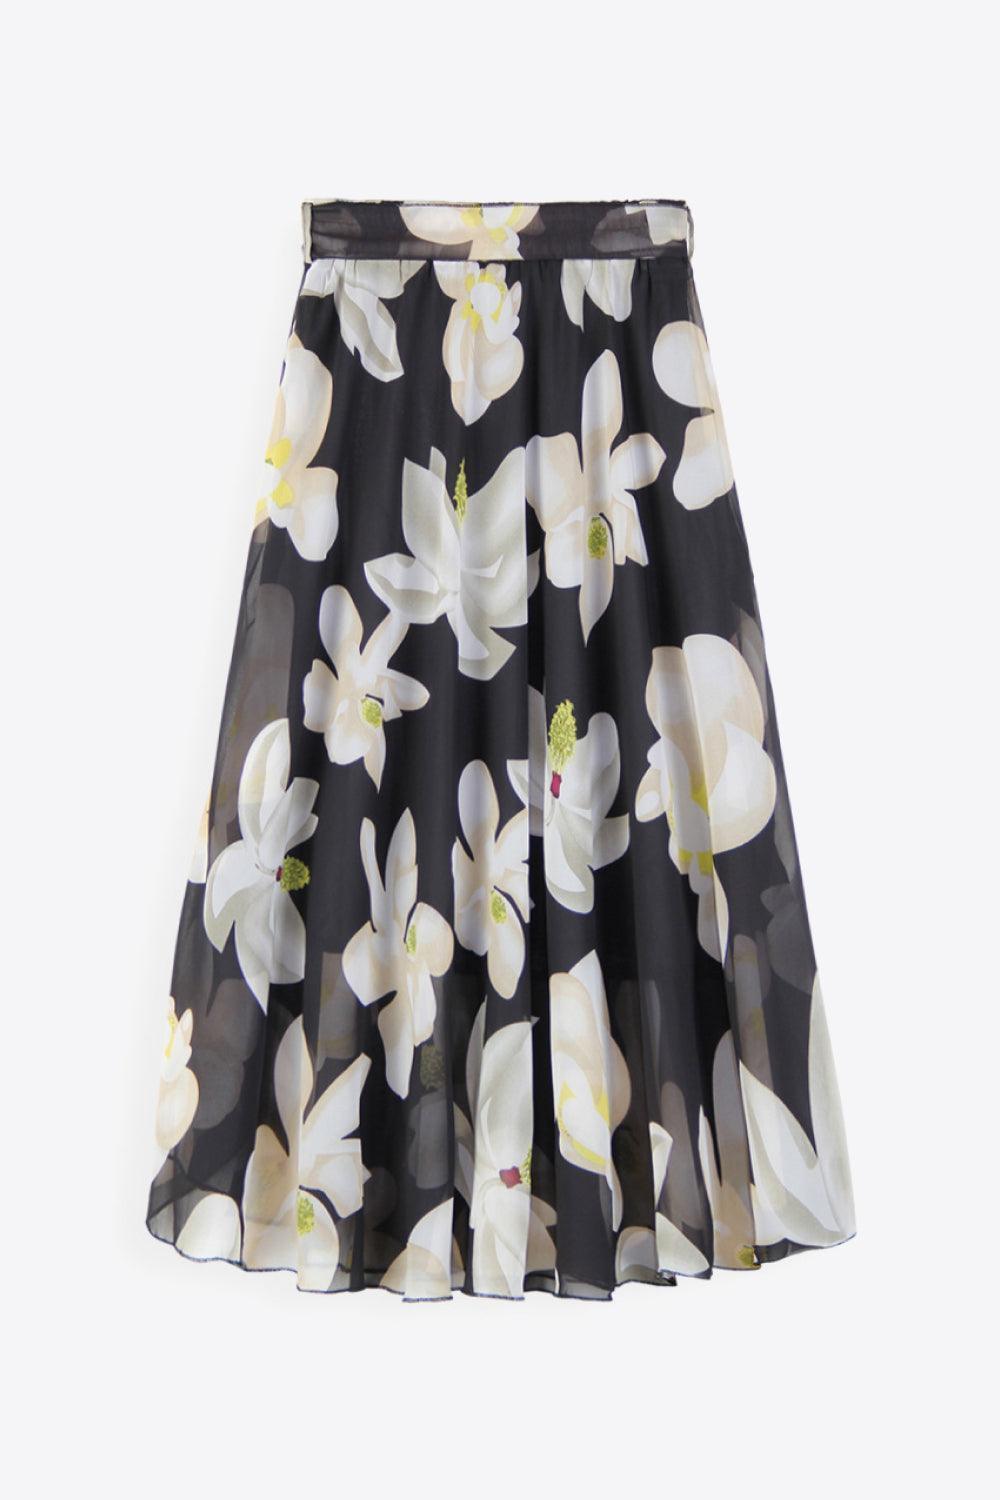 Fascinating Plus Size Floral Tie-Waist Skirt - MXSTUDIO.COM